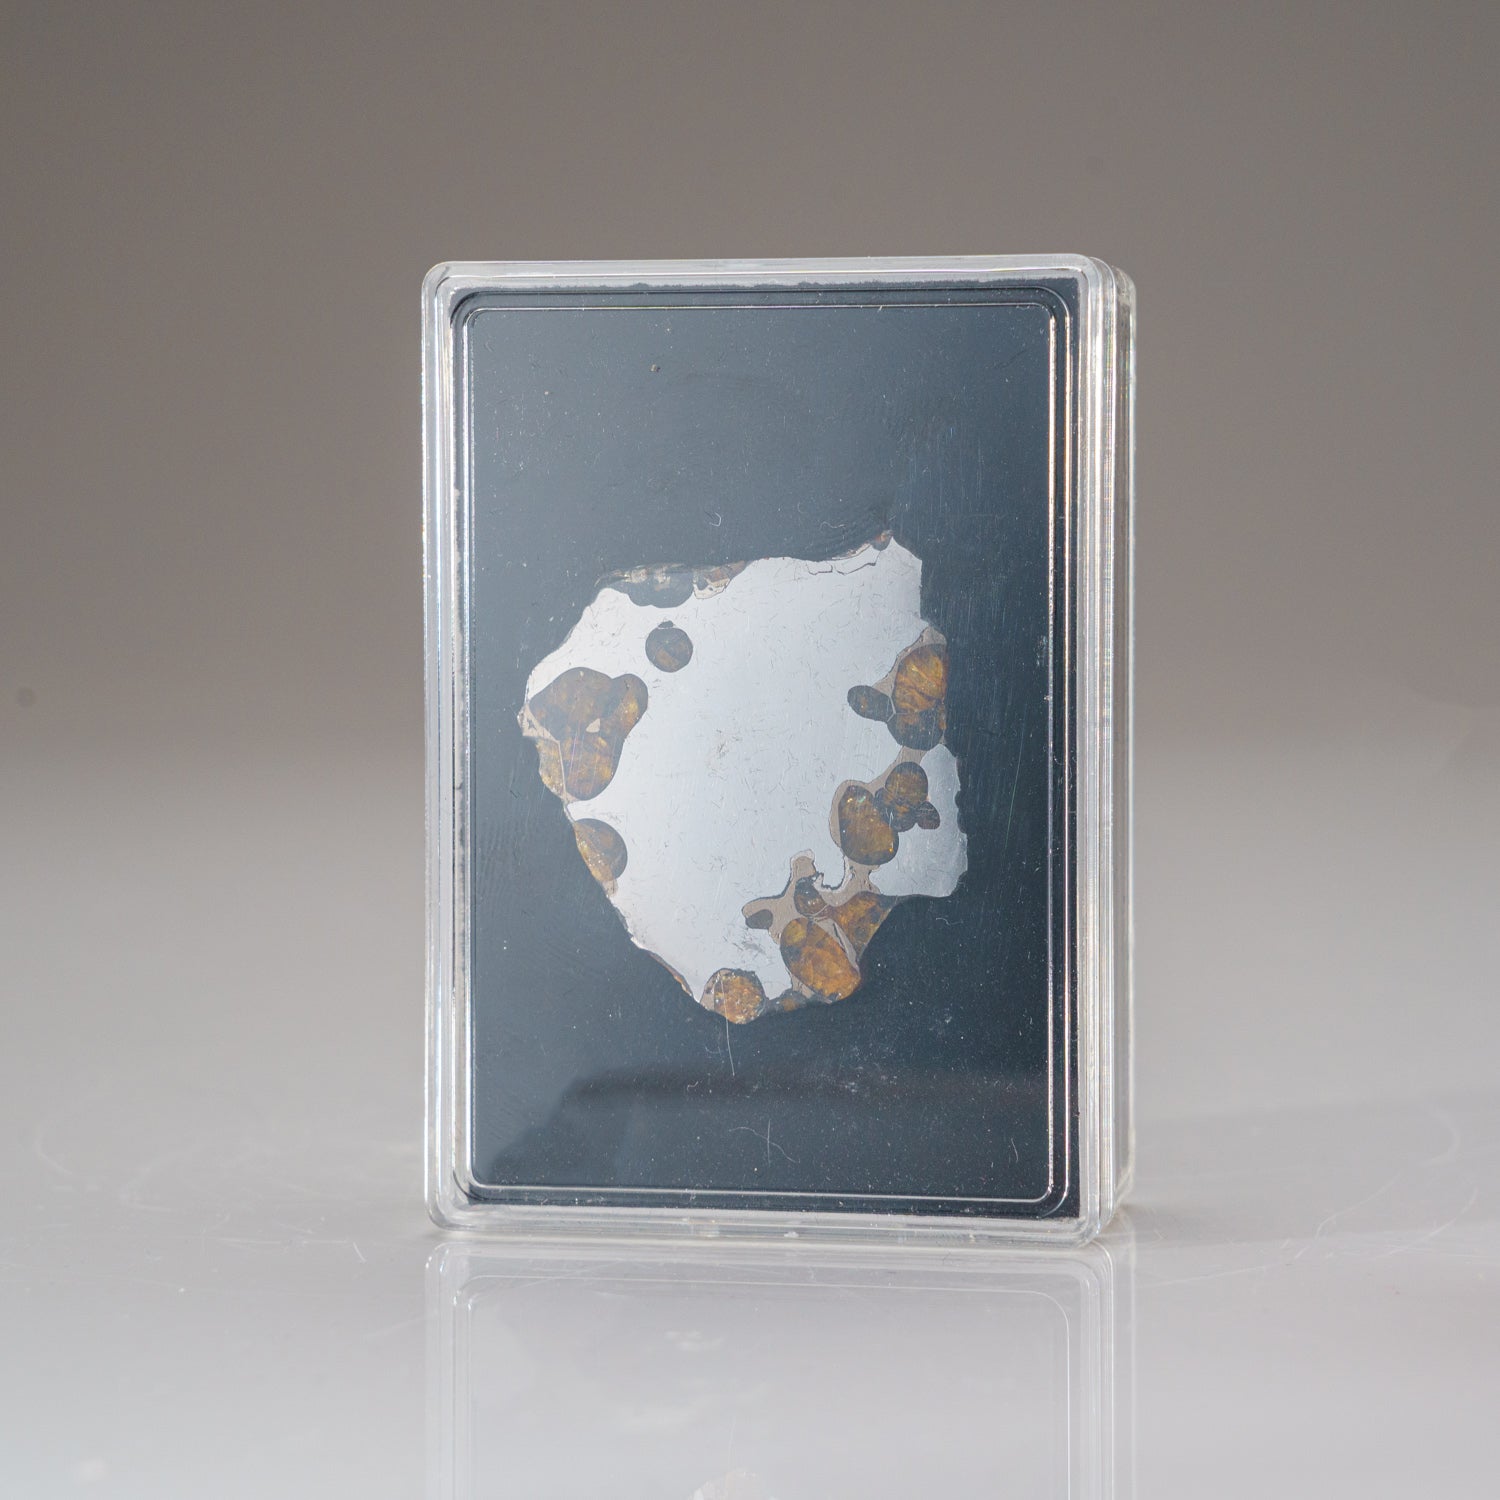 Genuine Brenhama Pallasite Meteorite Slice (20 grams)